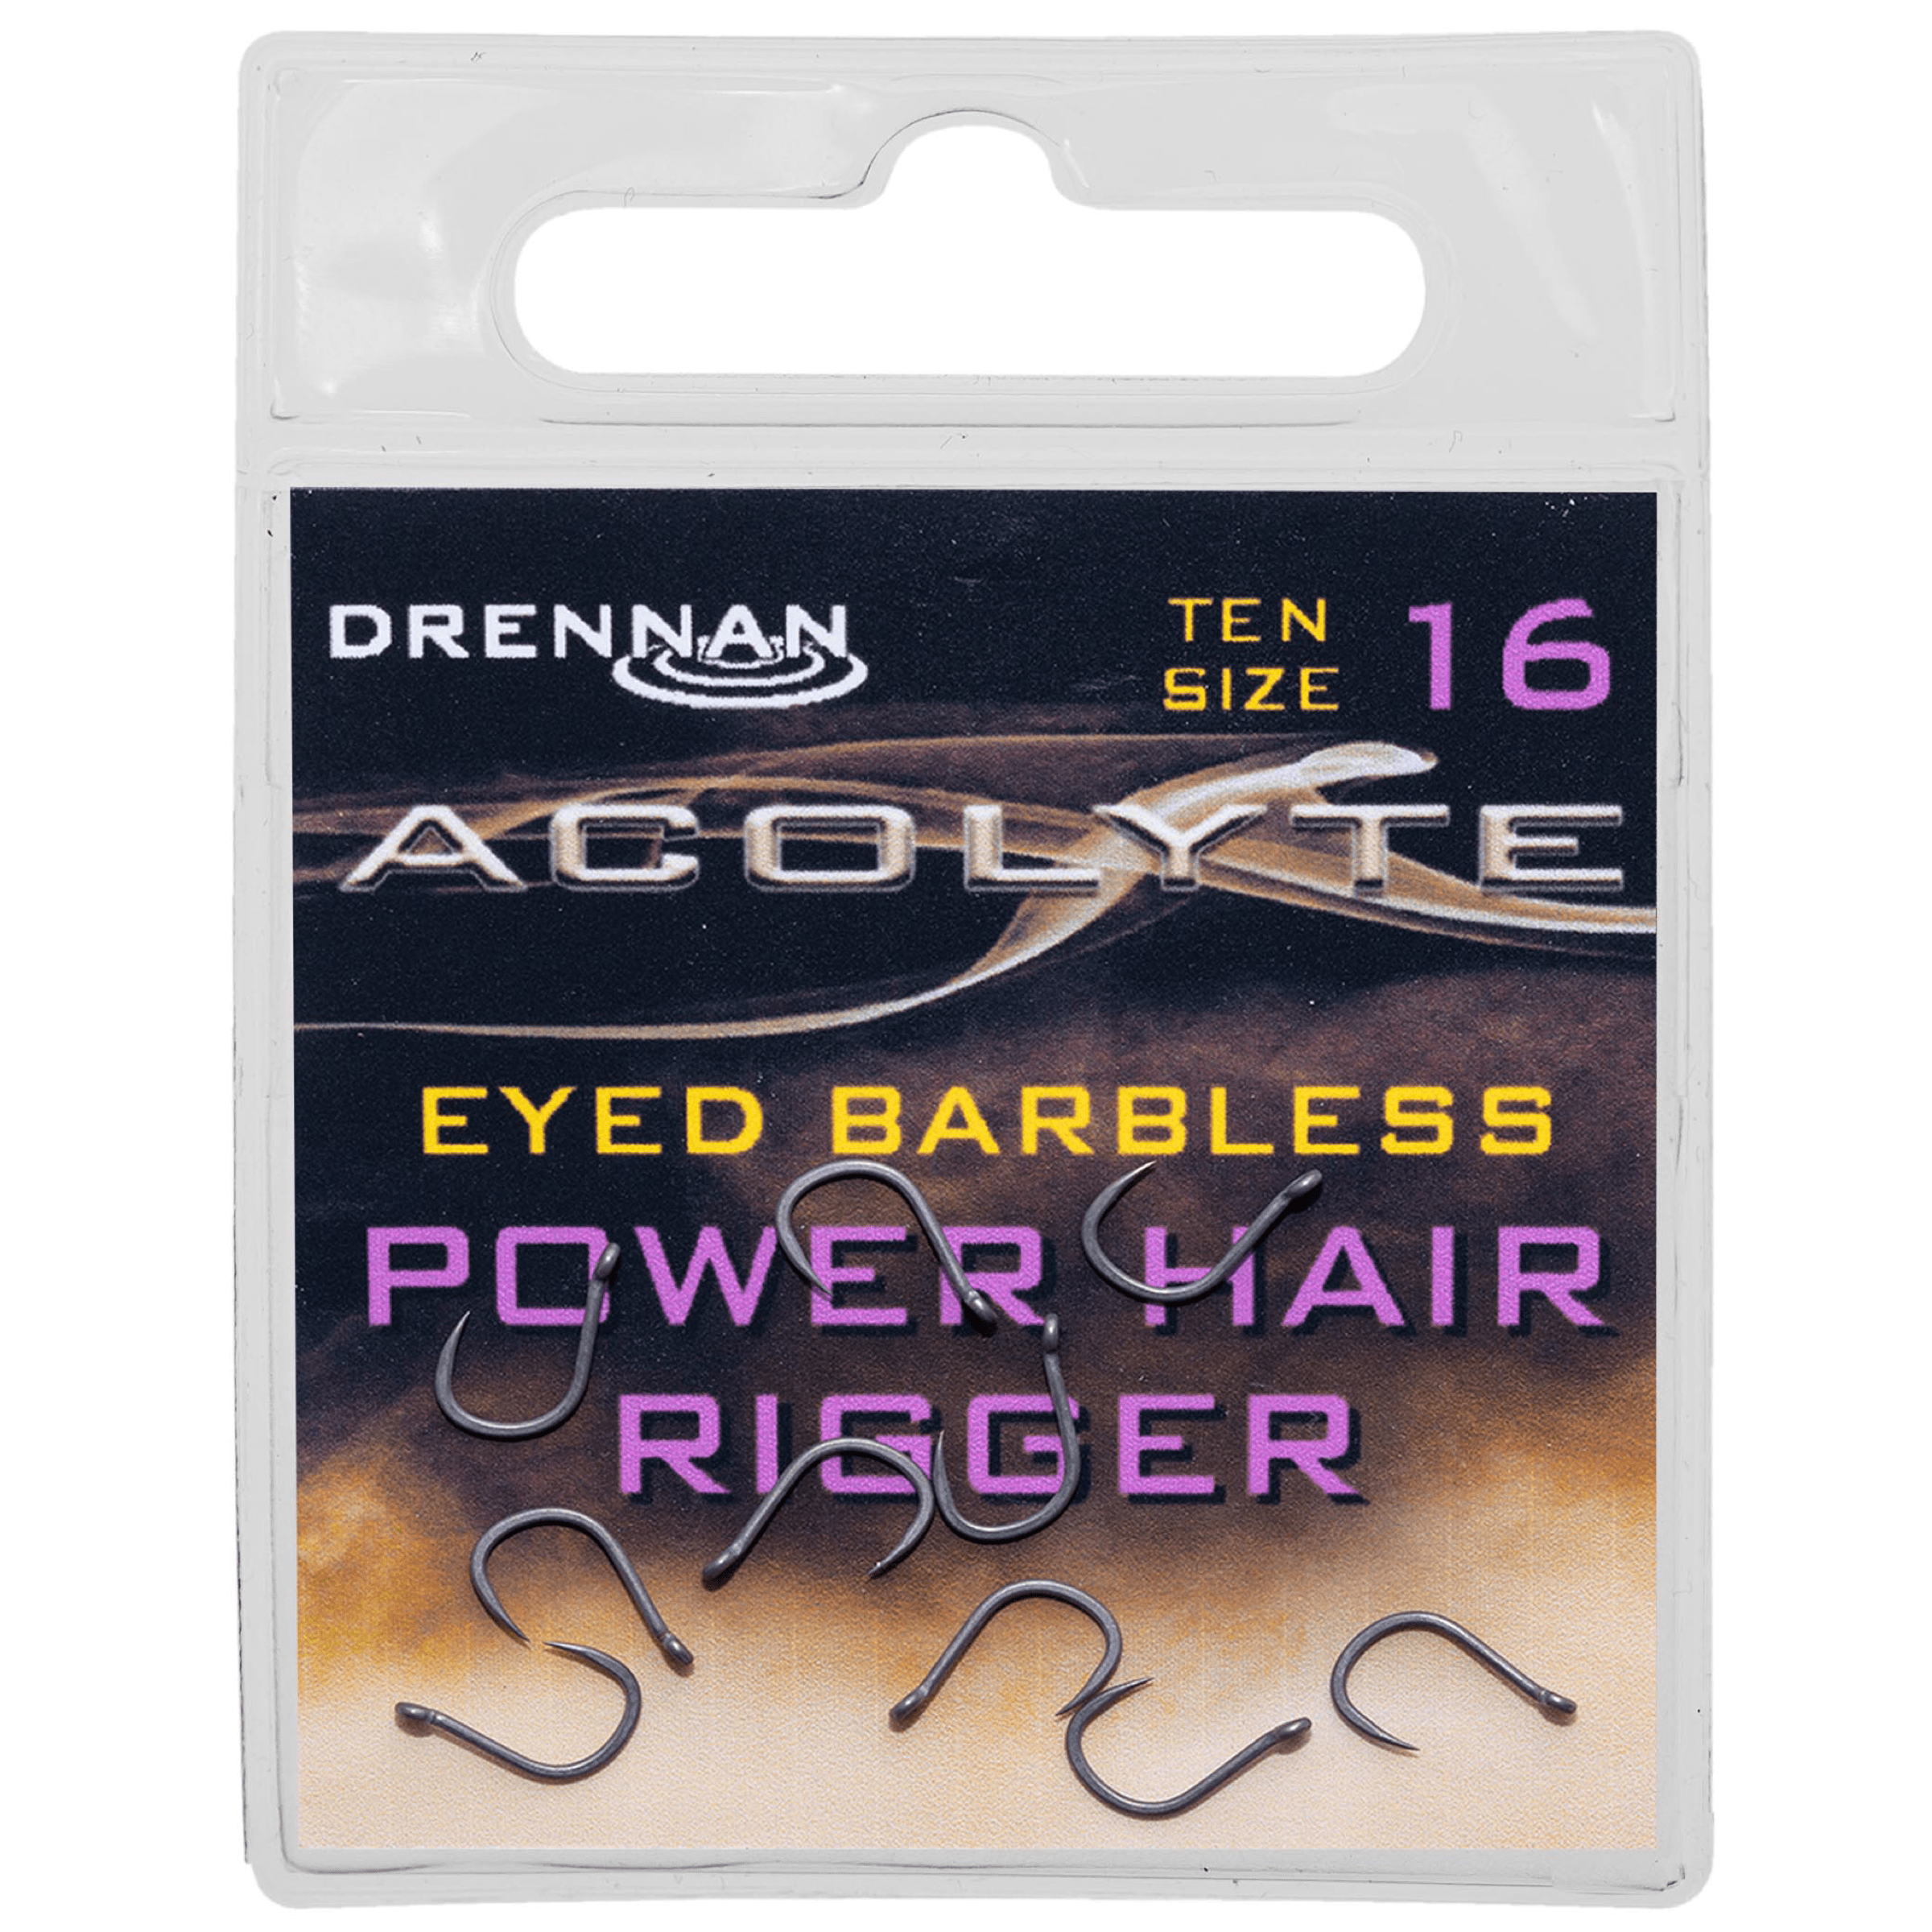 drennan acolyte power hair riggers barbless